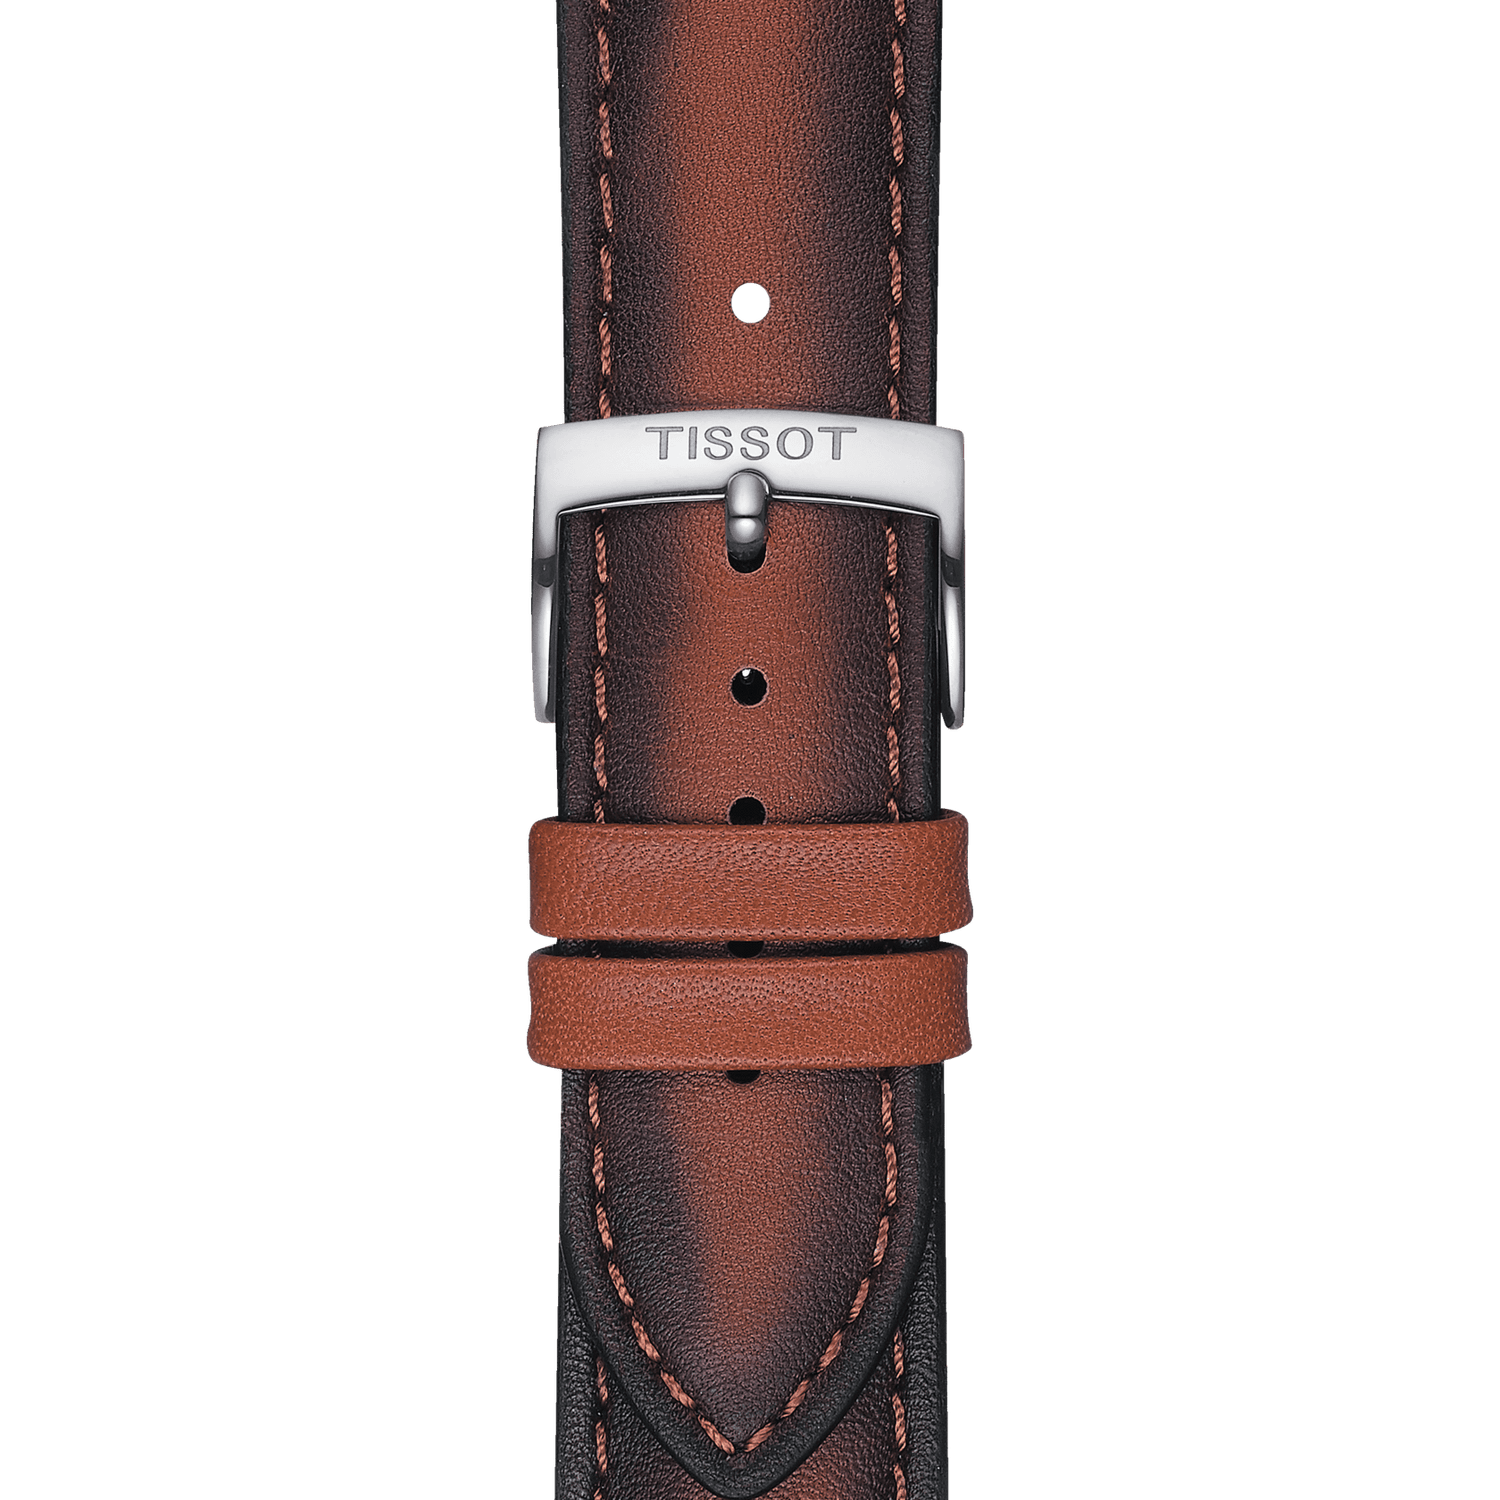 Originele bruine lederen Tissot-band, aanzet 20 mm